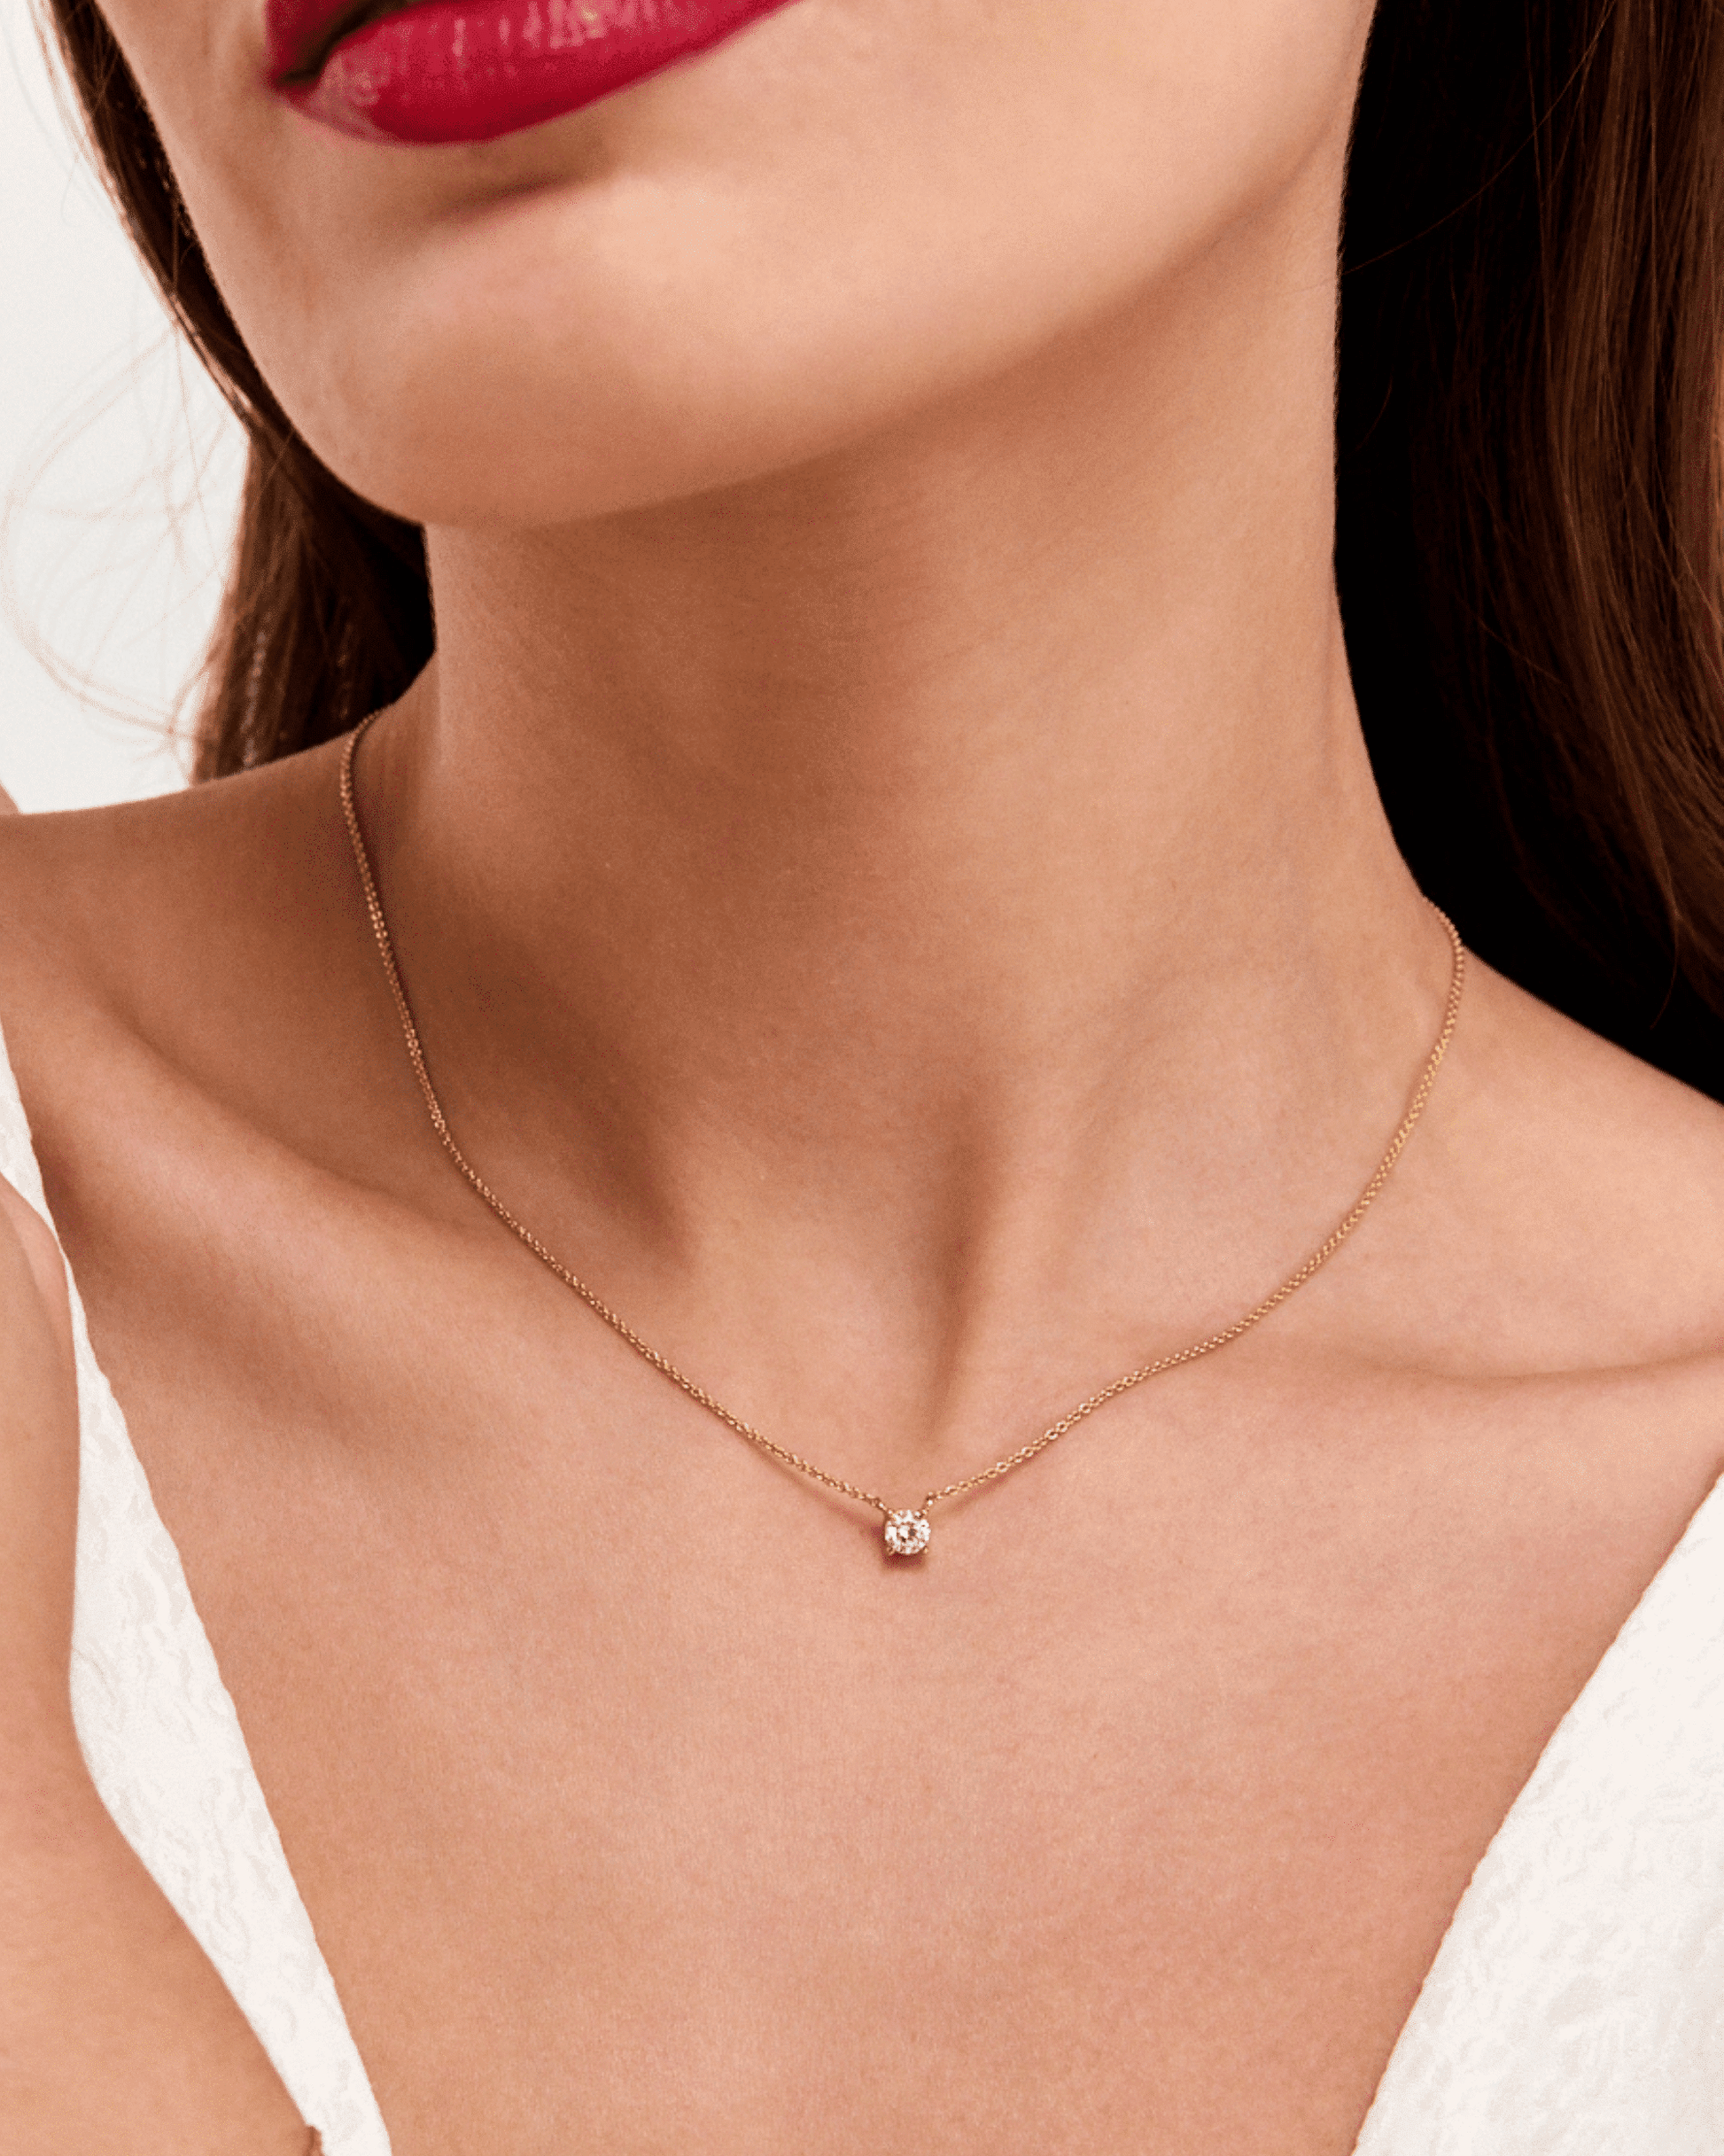 Diamond Solitaire Necklace - 14K Rose Gold Necklaces magal-dev 